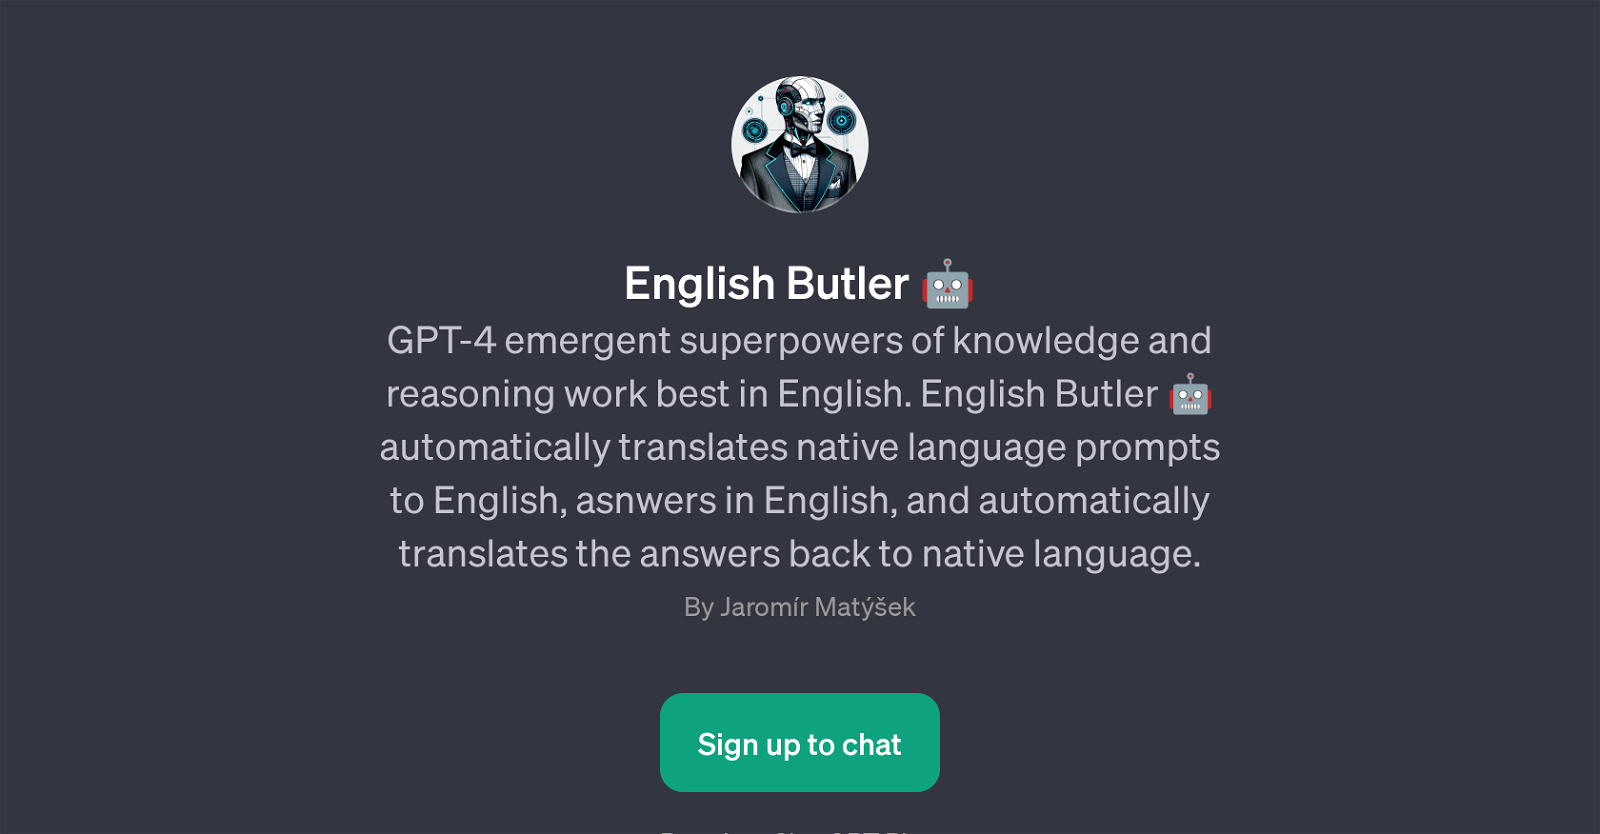 English Butler website